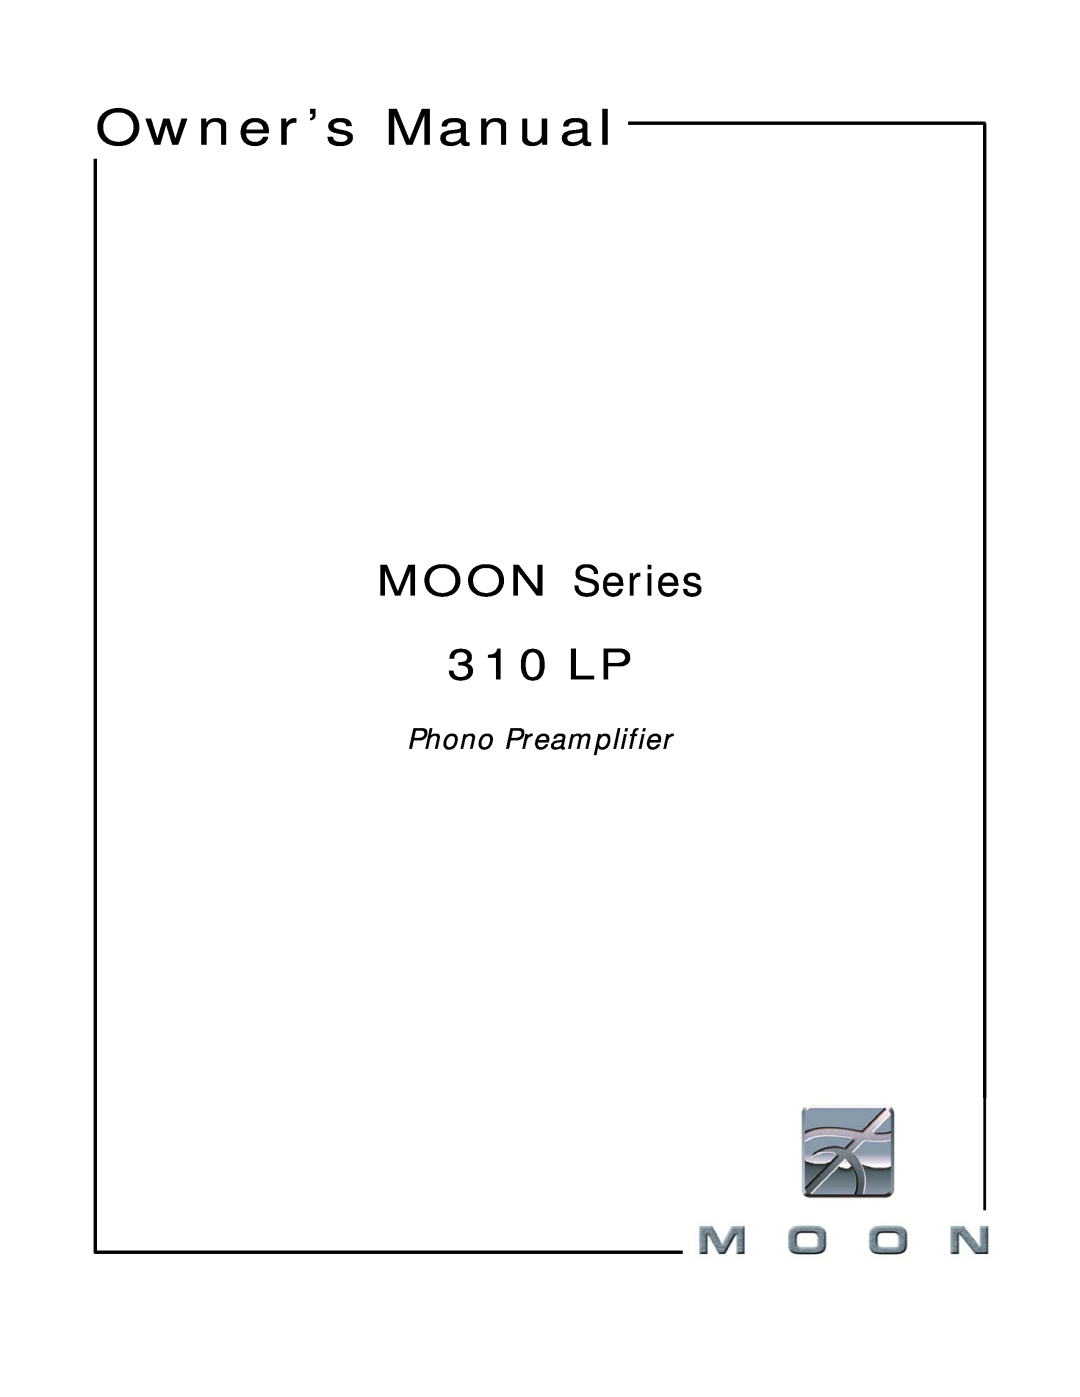 Simaudio owner manual MOON Series 310 LP, Phono Preamplifier 